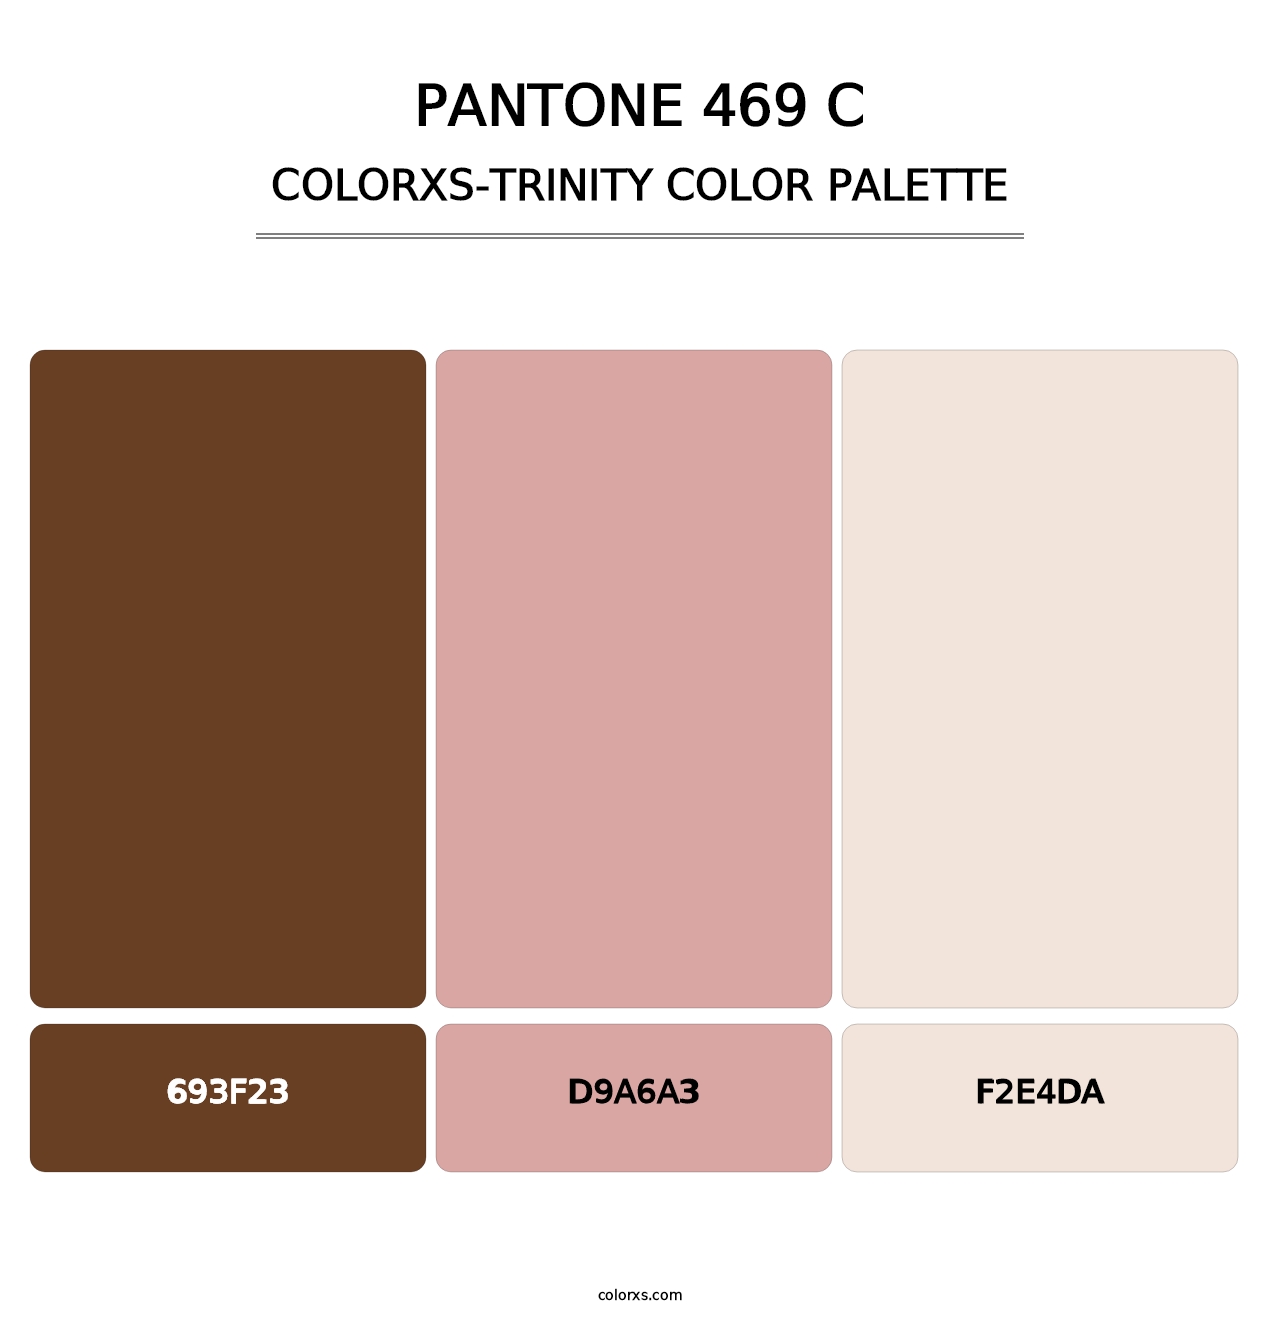 PANTONE 469 C - Colorxs Trinity Palette